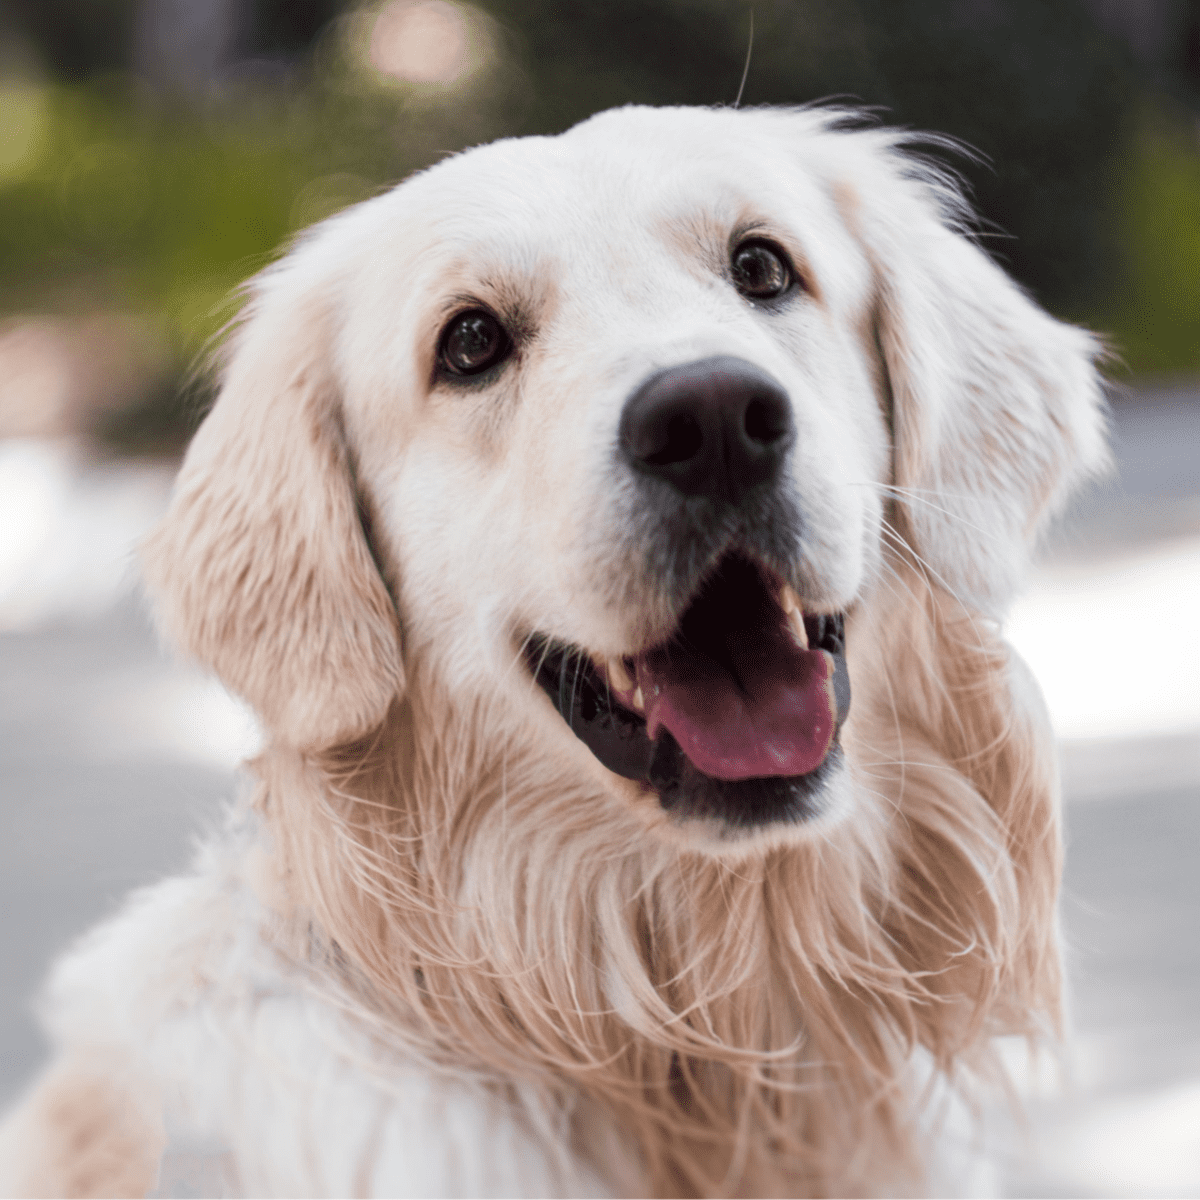 Dog for adoption - Dug, a Golden Retriever Mix in Louisville, KY